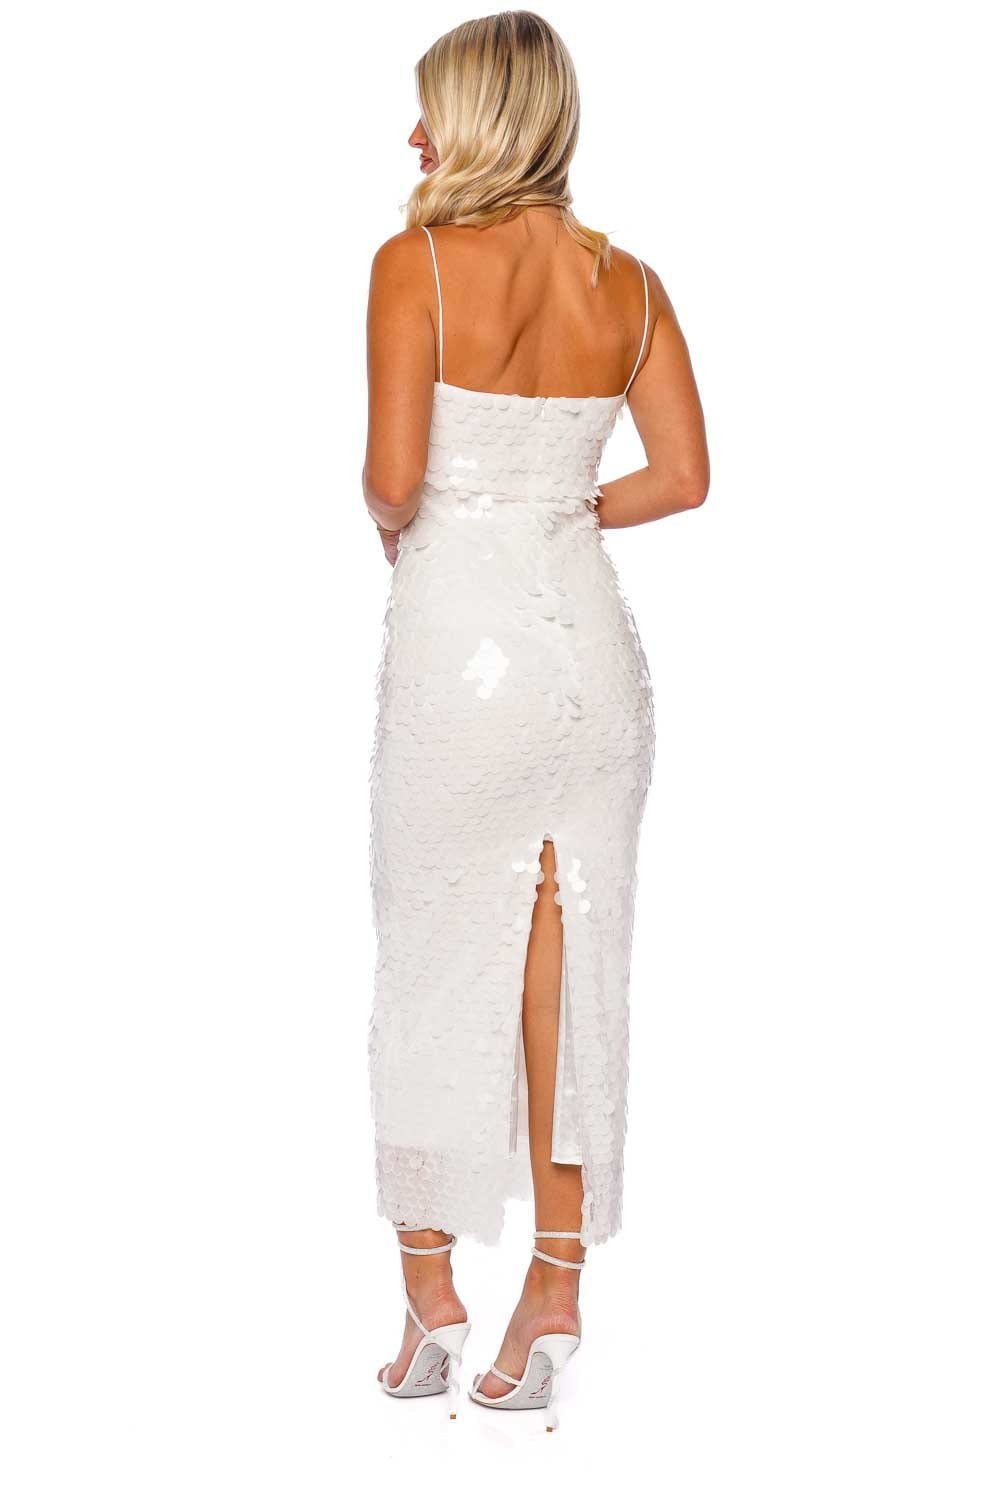 The New Arrivals by Ilkyaz Ozel Phoenix White Sequined Midi Dress